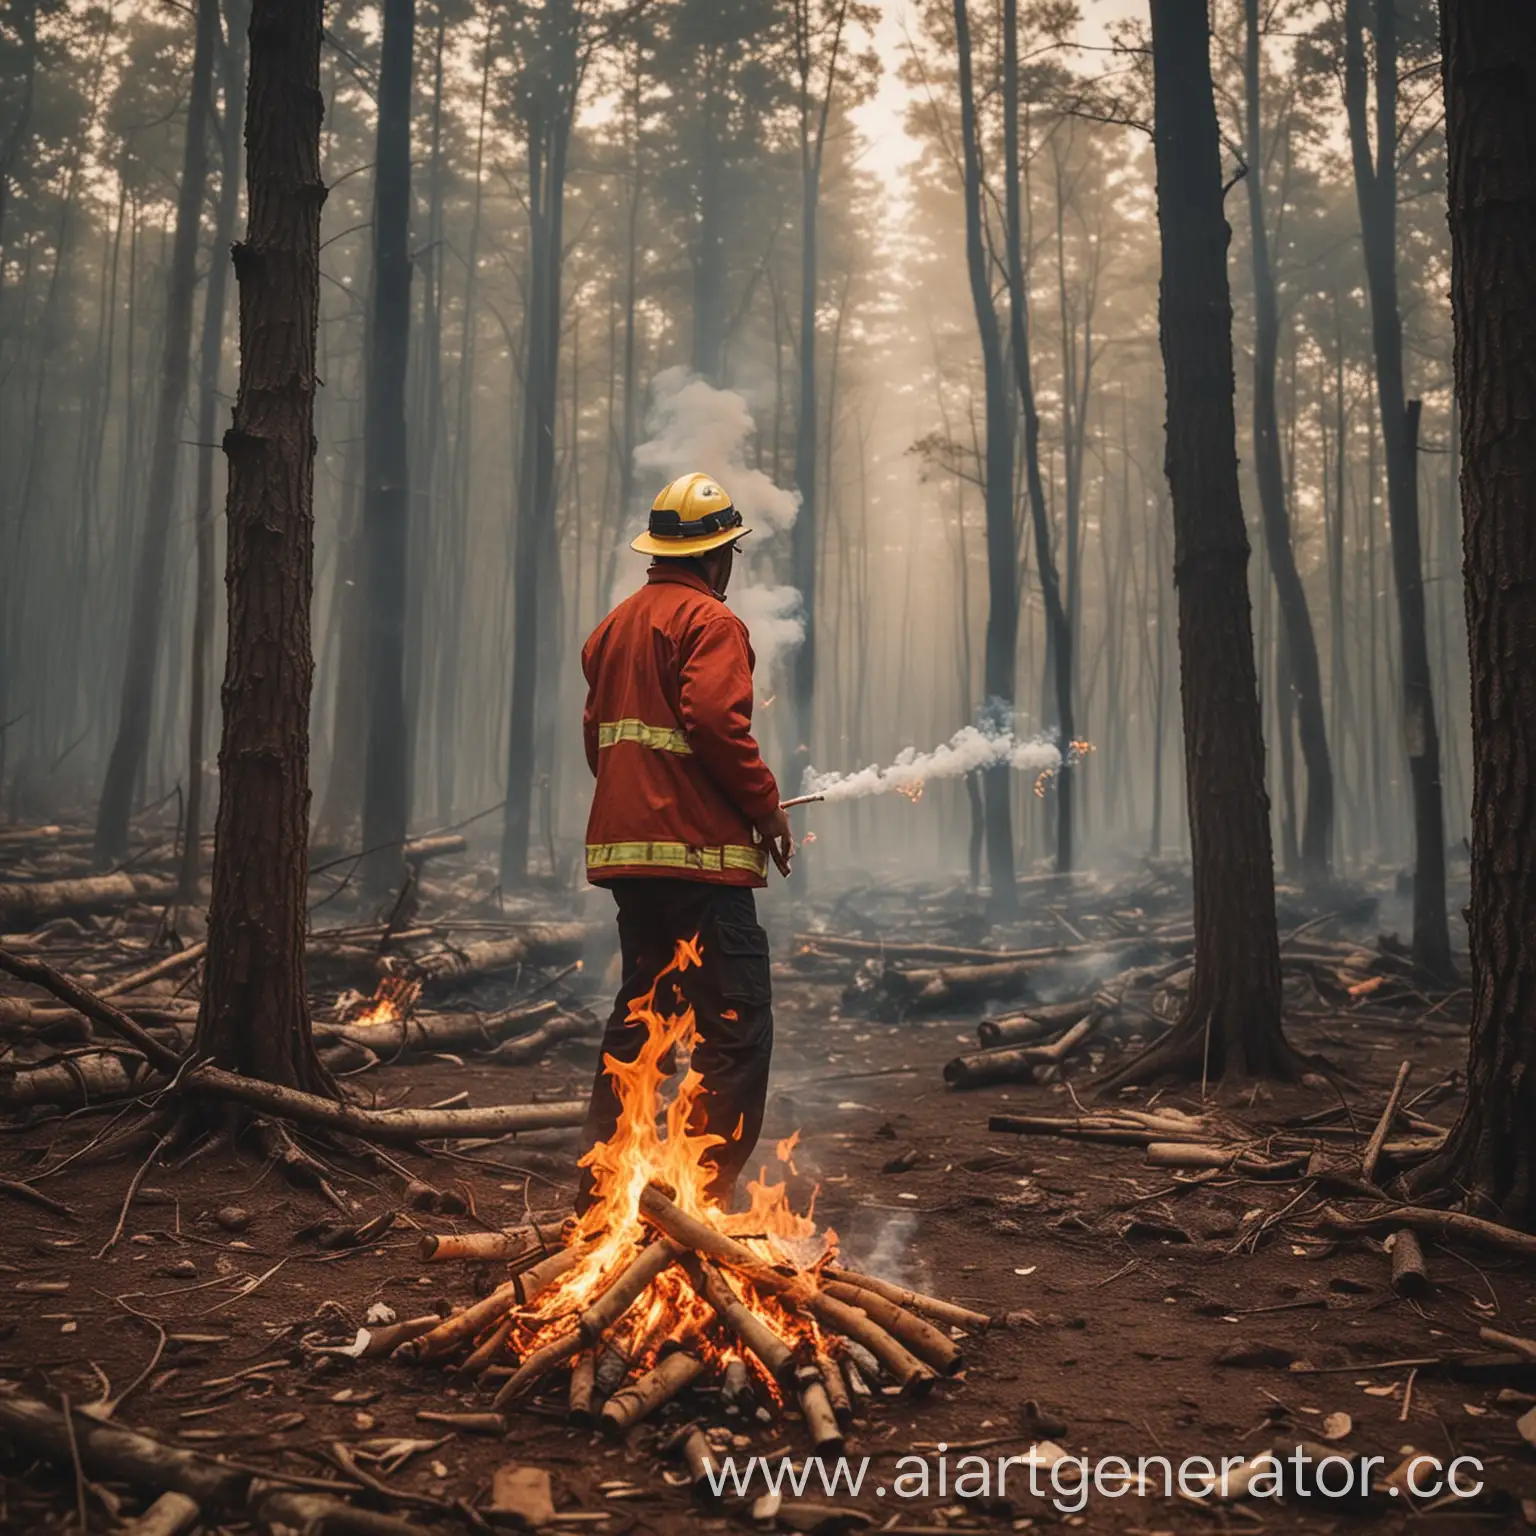 Man-Causing-Forest-Fire-Urgent-Fire-Safety-Sign